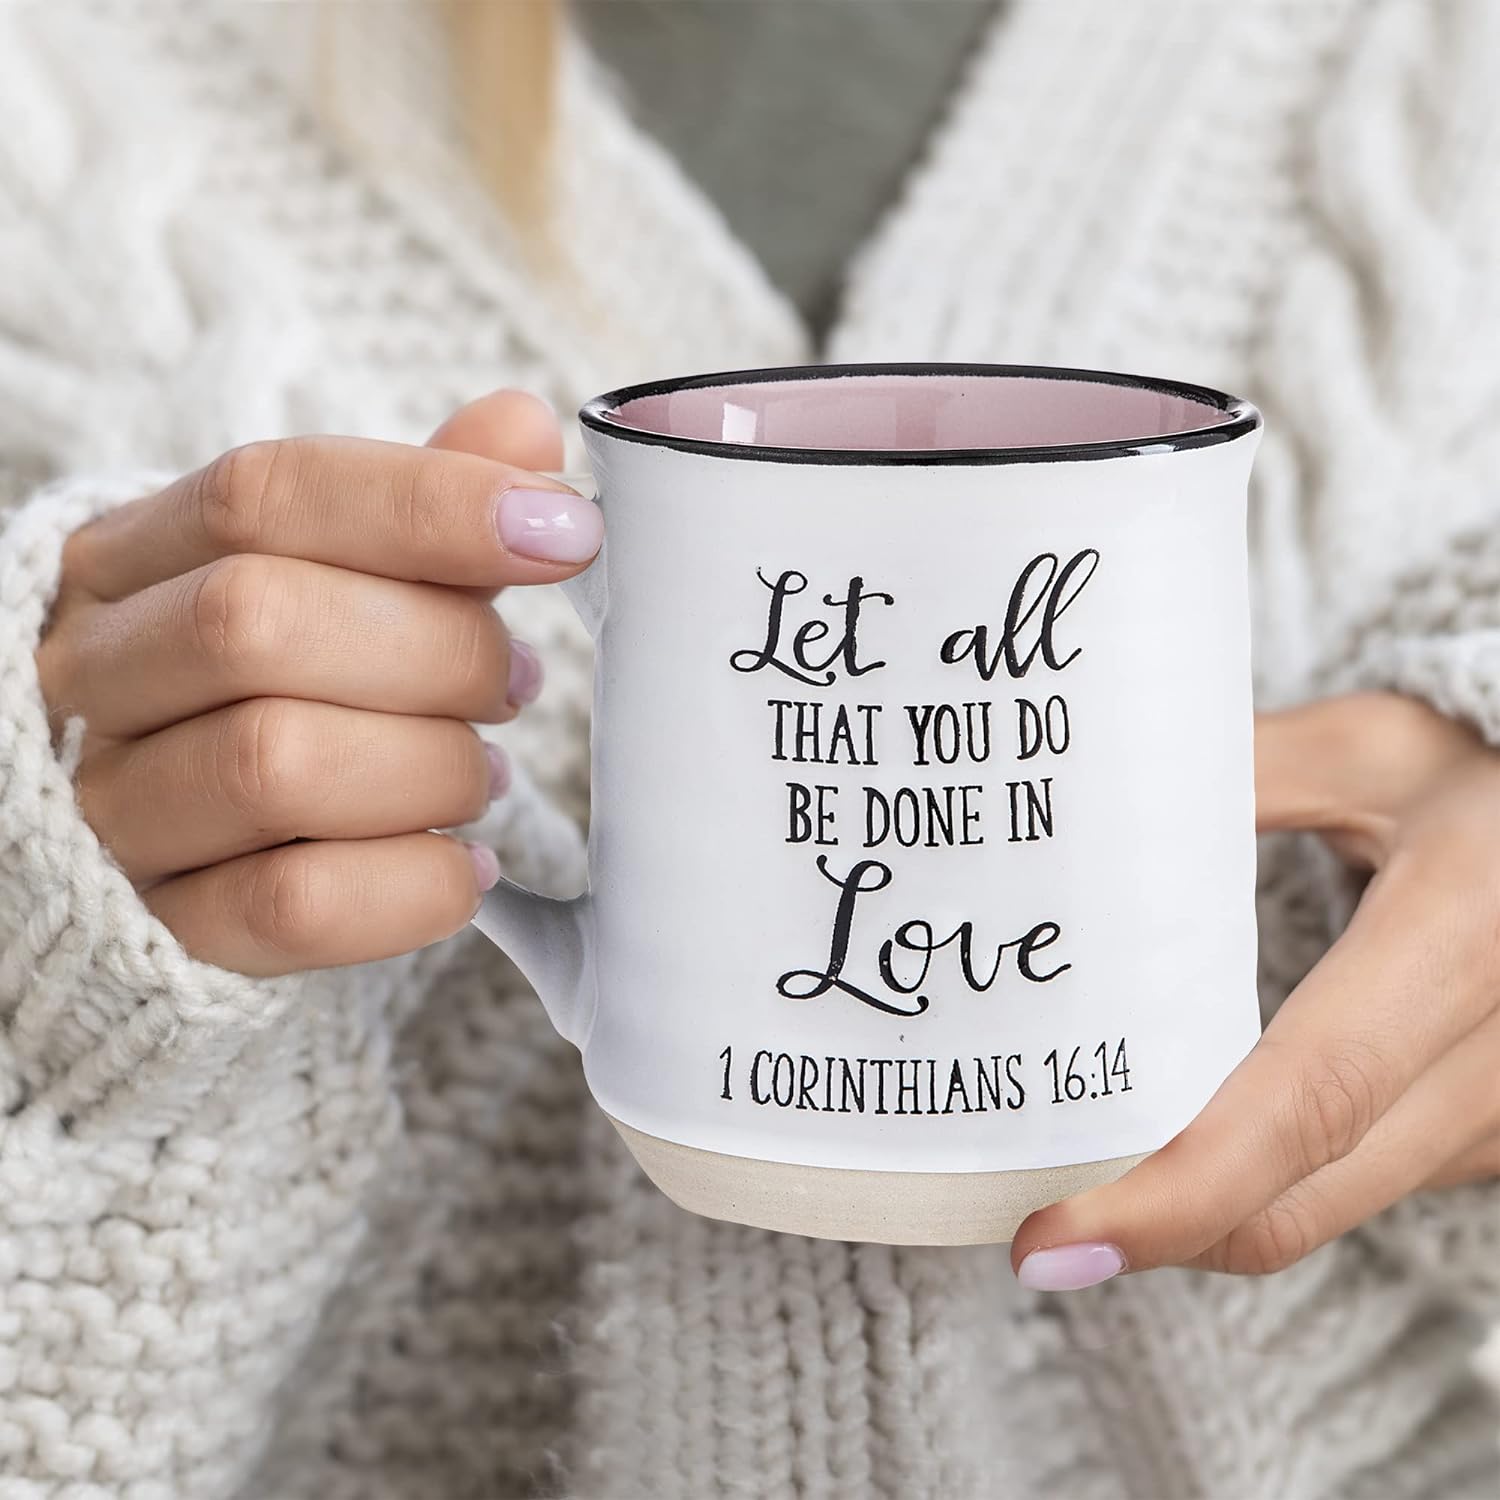 Let All That You Do Be Done In Love Christian White Ceramic Mug - 18oz claimedbygoddesigns